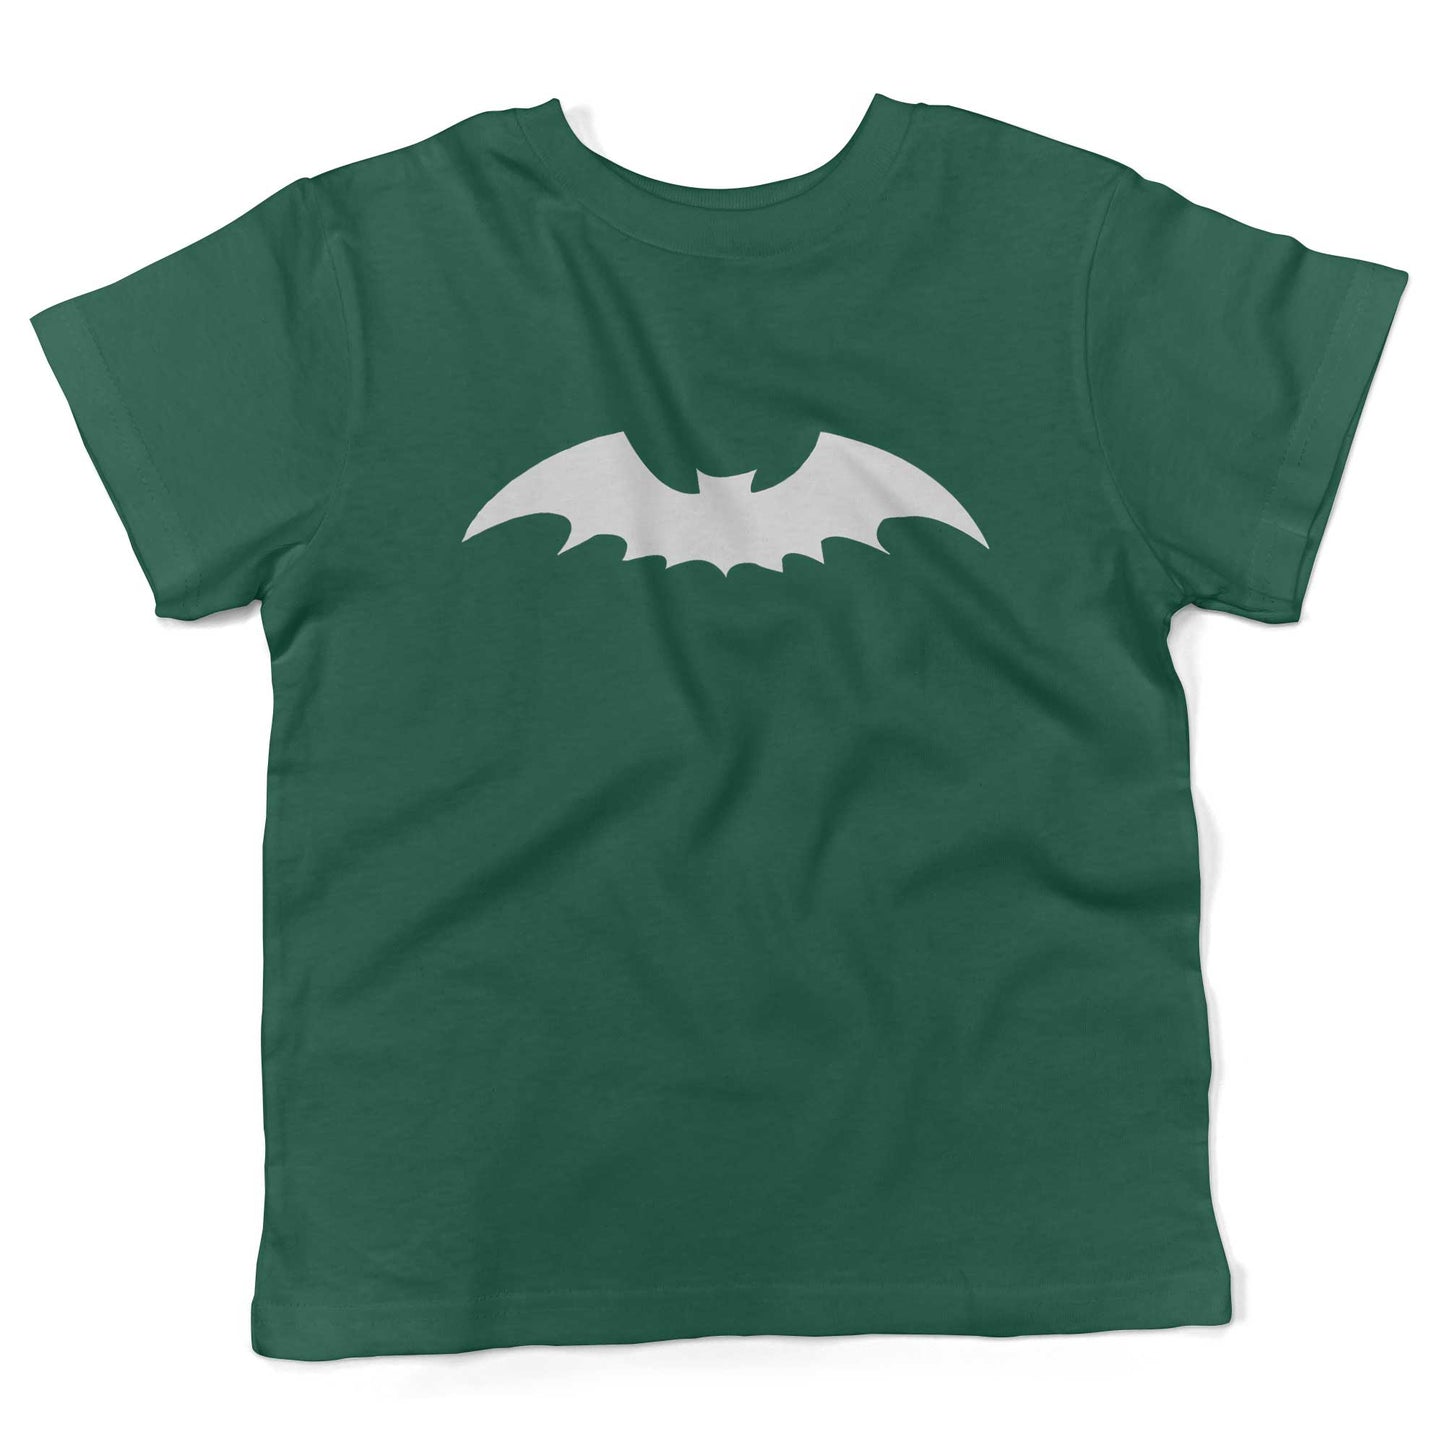 Gothic Bat Toddler Shirt-Kelly Green-2T